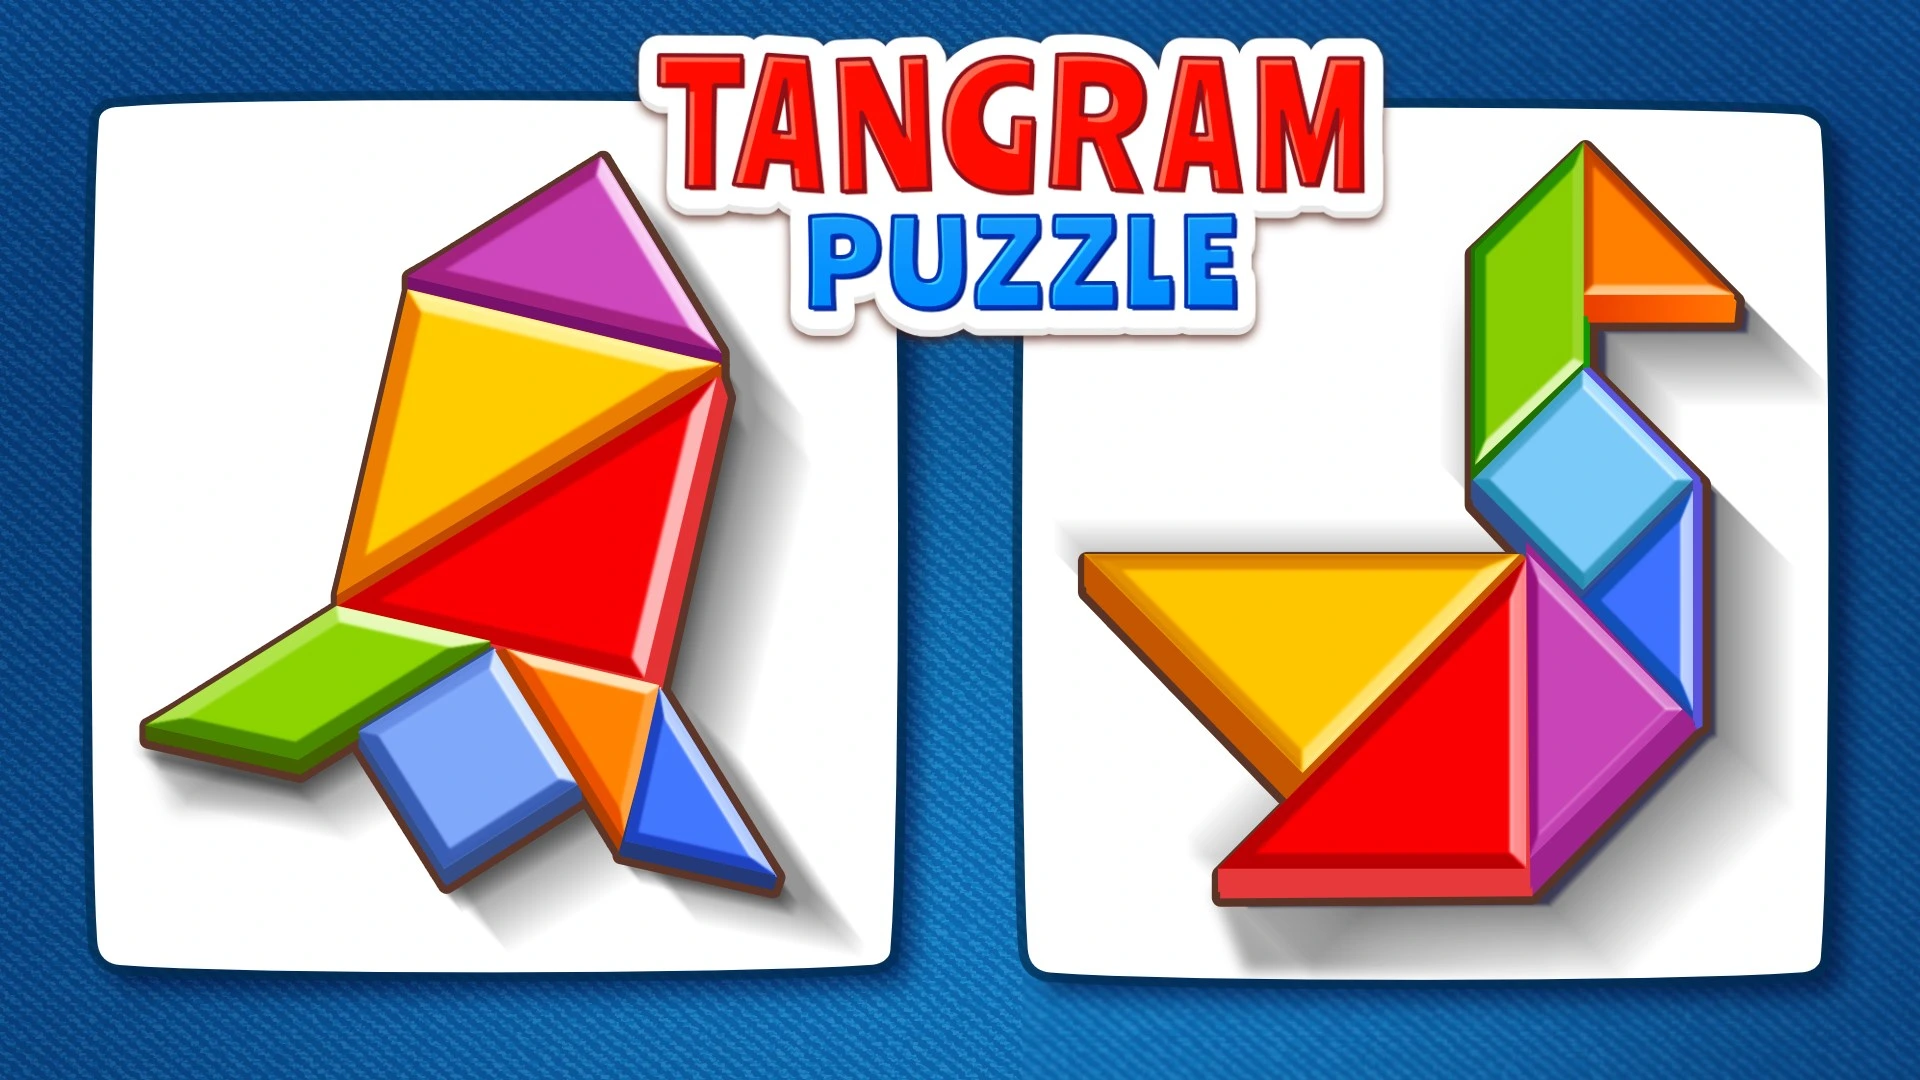 What is tangram online?